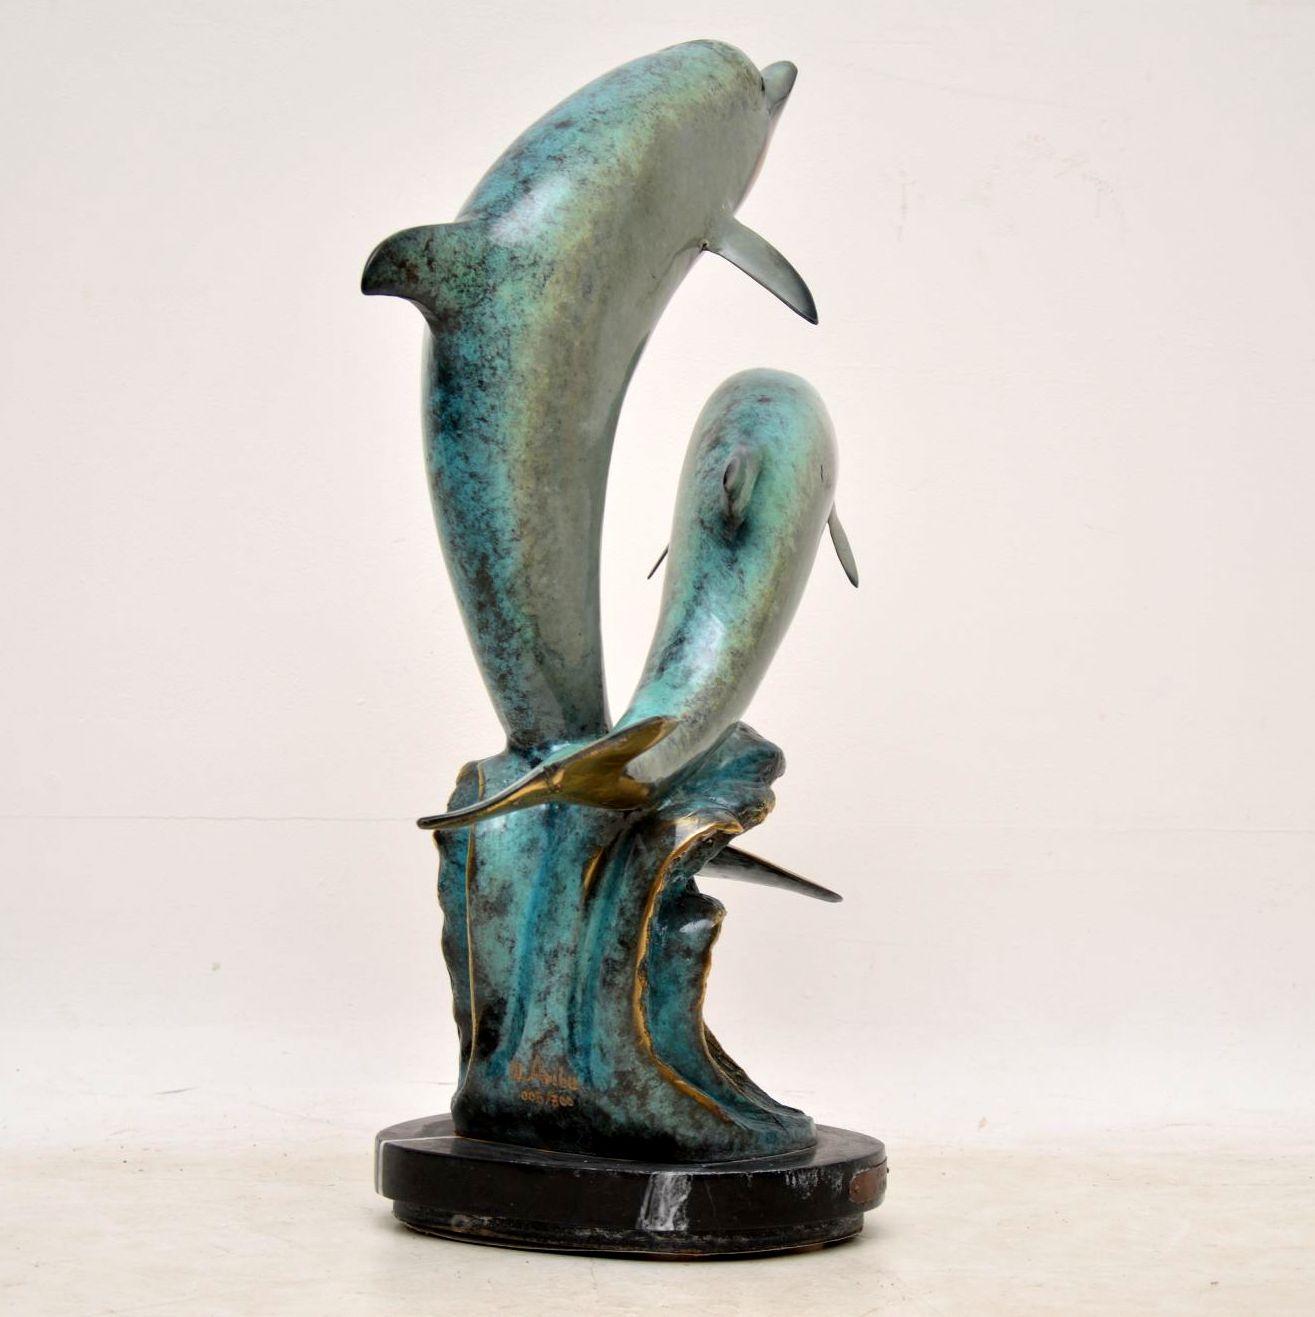 Limited Edition Bronze Sculpture by W. Aribu, “Pals 1” 005/300 3